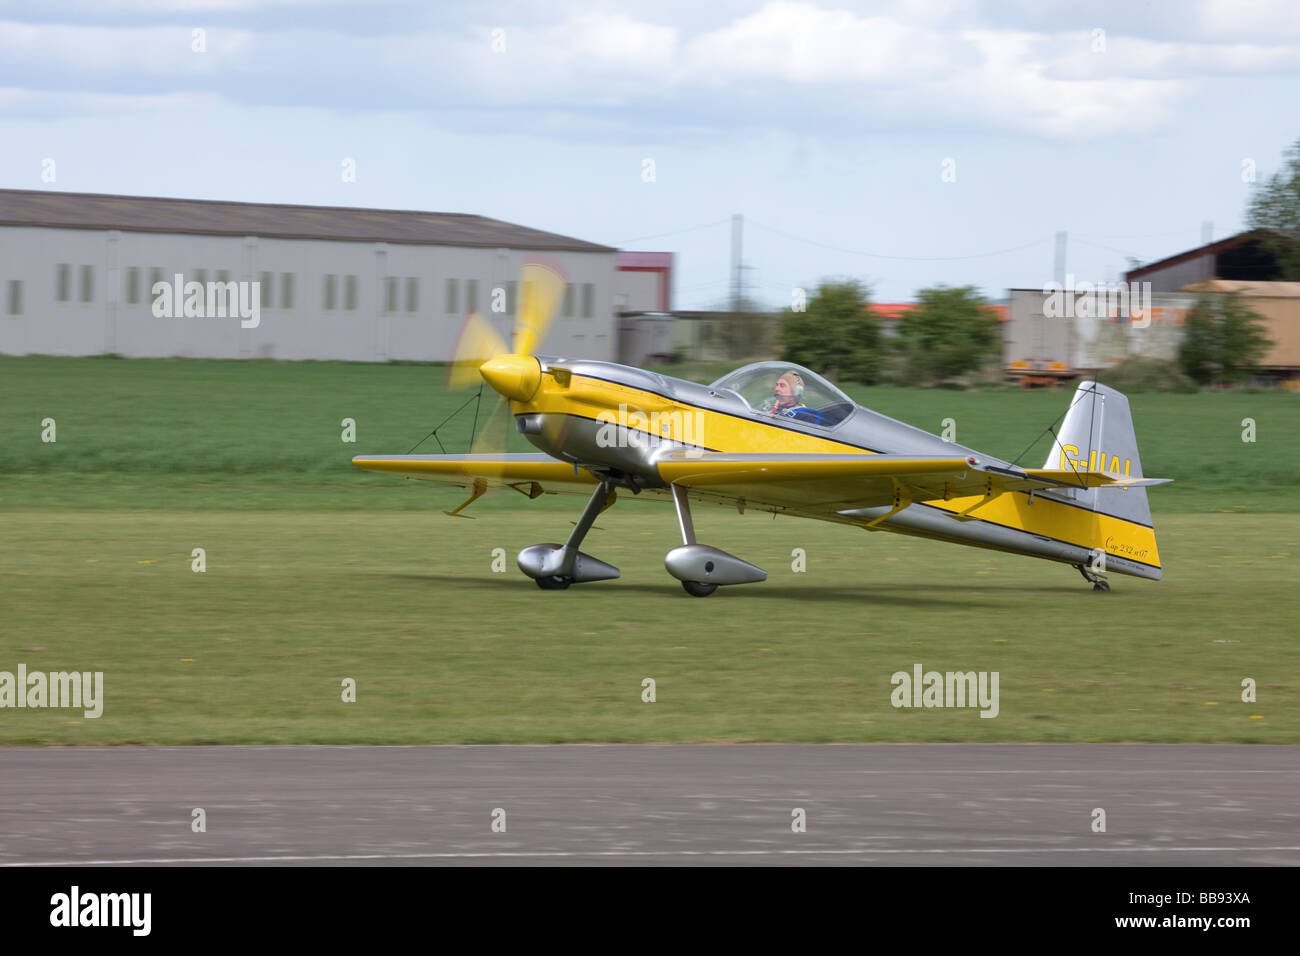 Avions Mundry CAP 232 G-IIAJ landing at Breighton Airfield Stock Photo